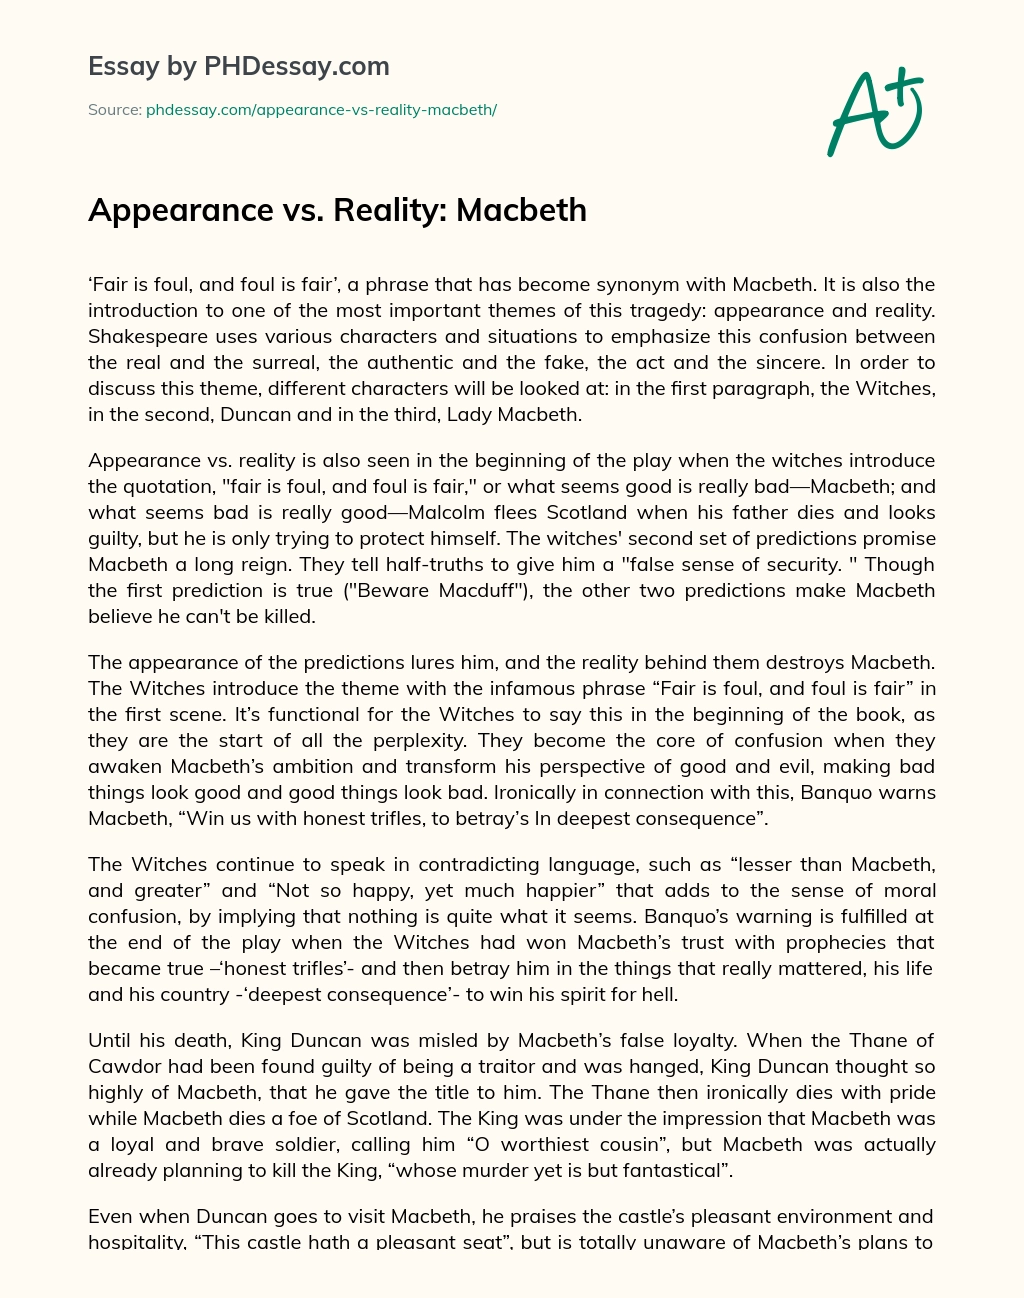 Appearance vs. Reality: Macbeth essay